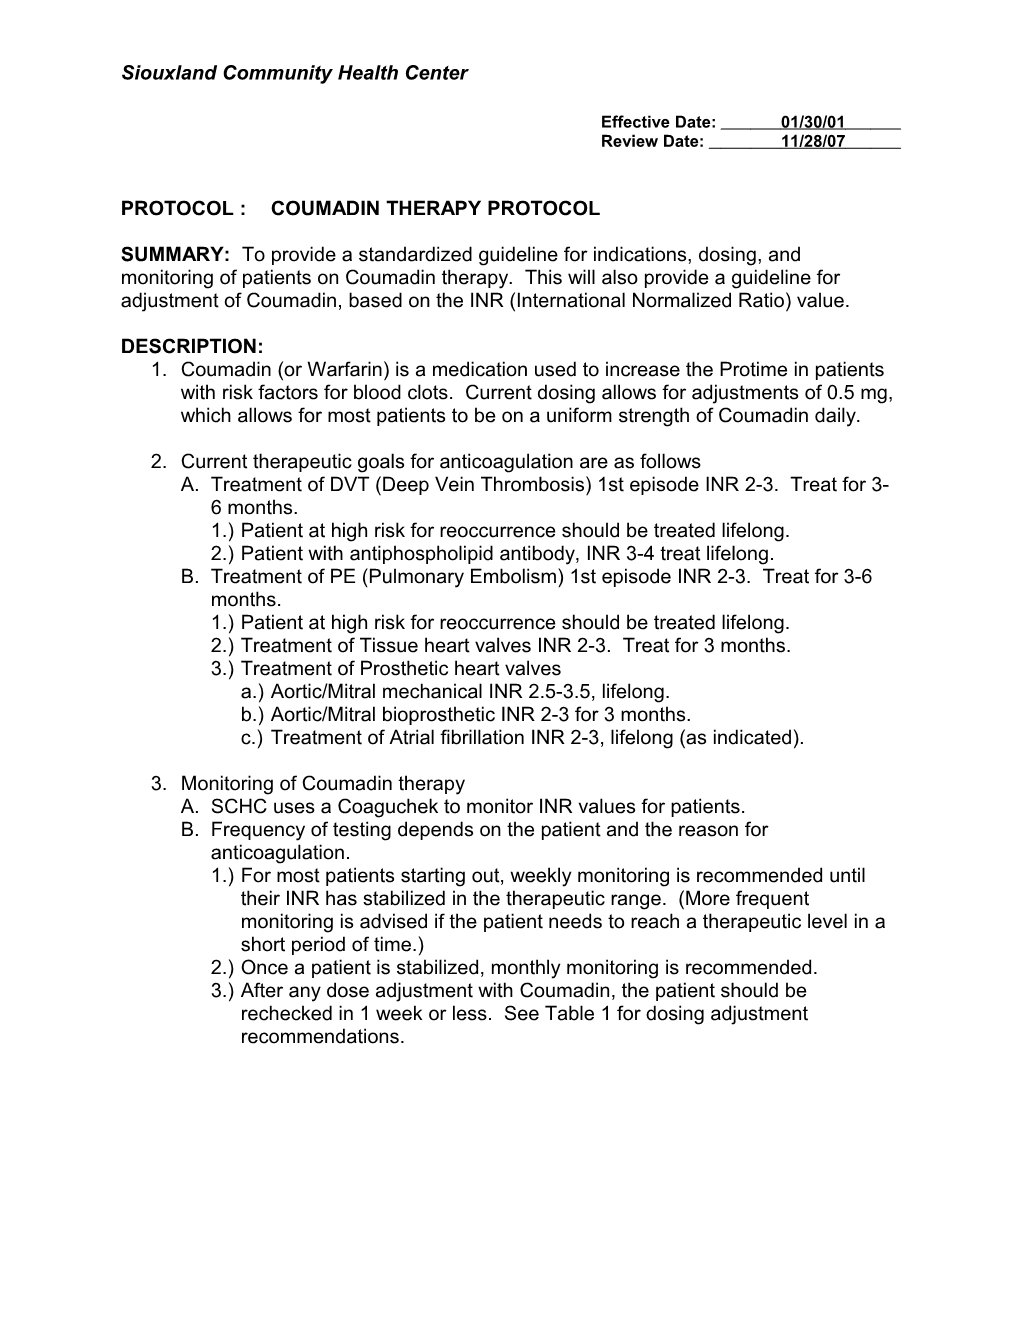 Protocol :Coumadin Therapy Protocol